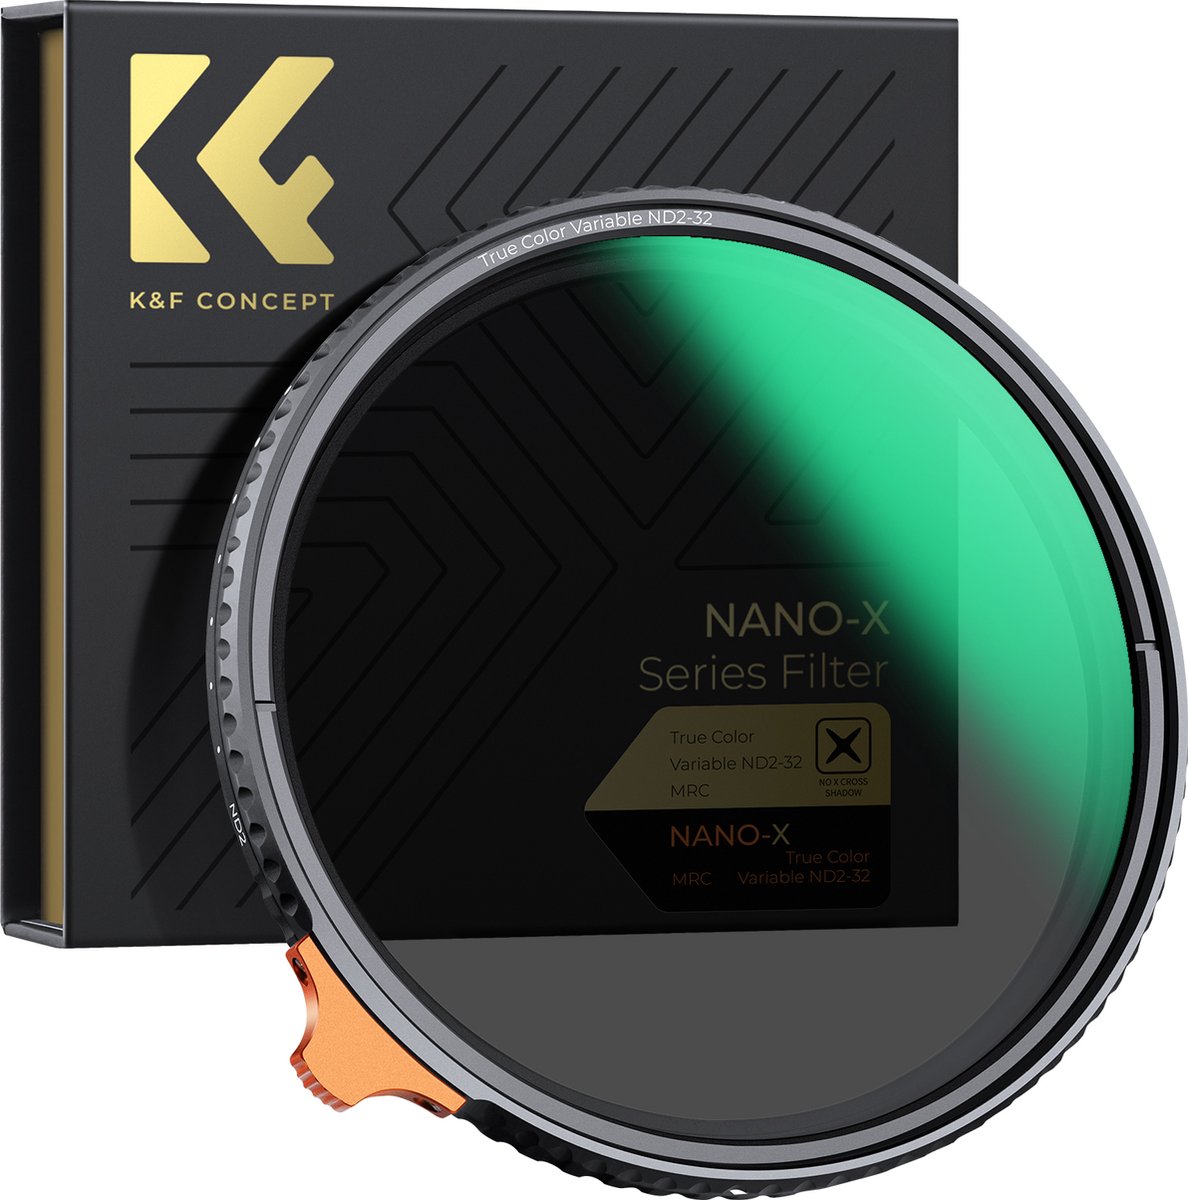 K&F Concept 77mm variabele ND2-32 Nano-X True color MRC grijsfilter ND filter